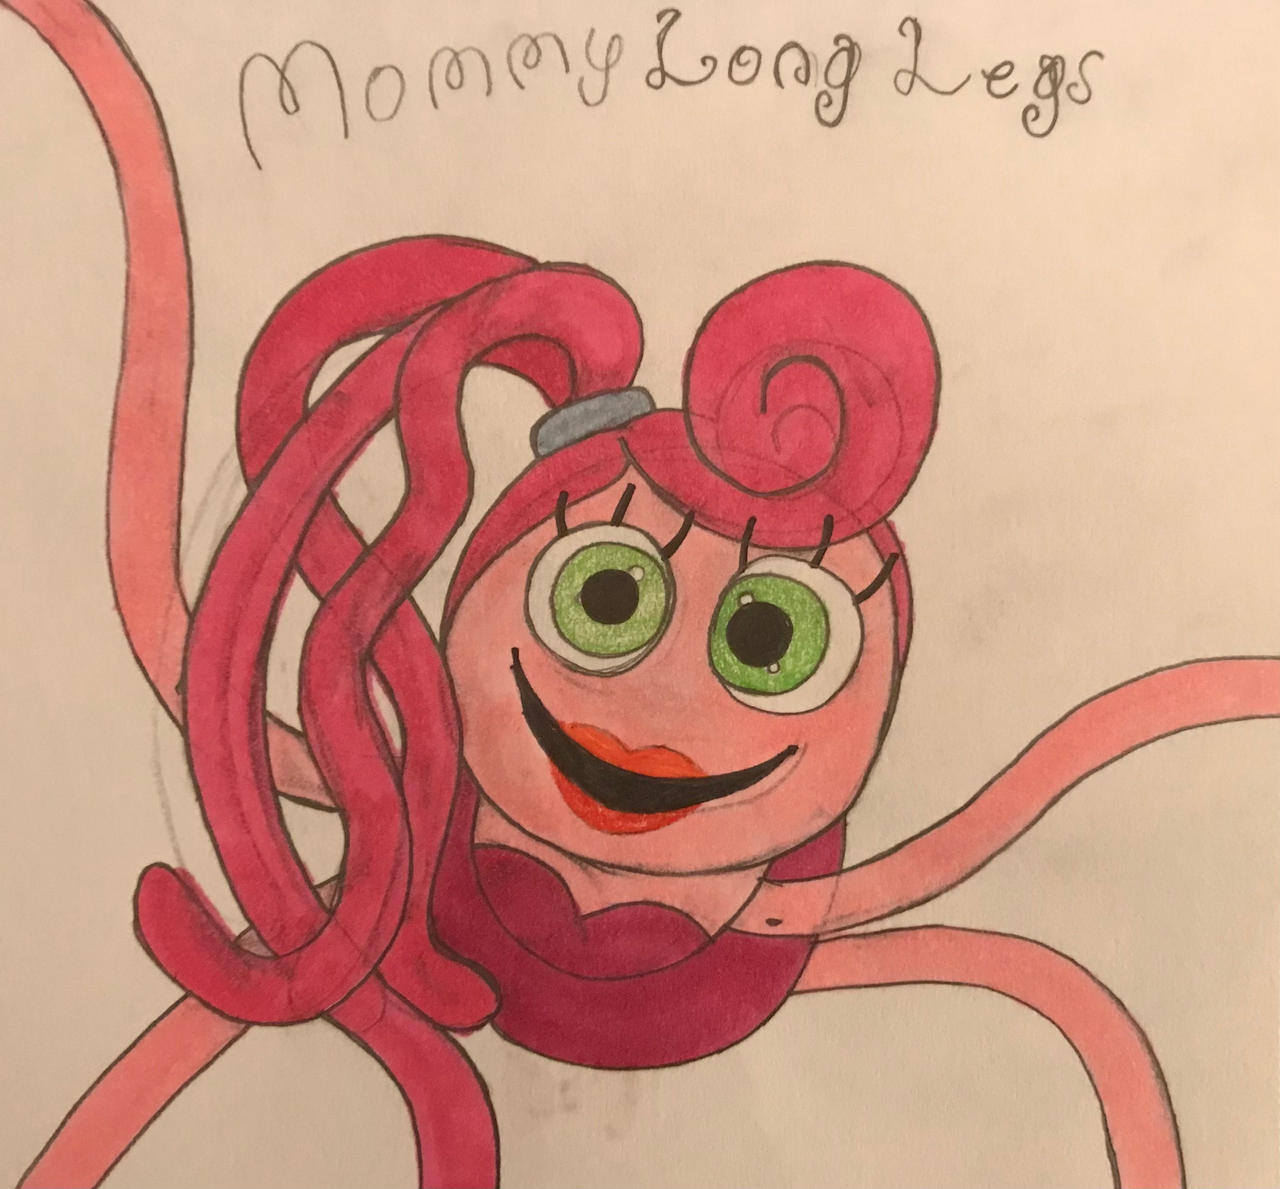 Pixilart - Mommy long legs by InkSlayer666